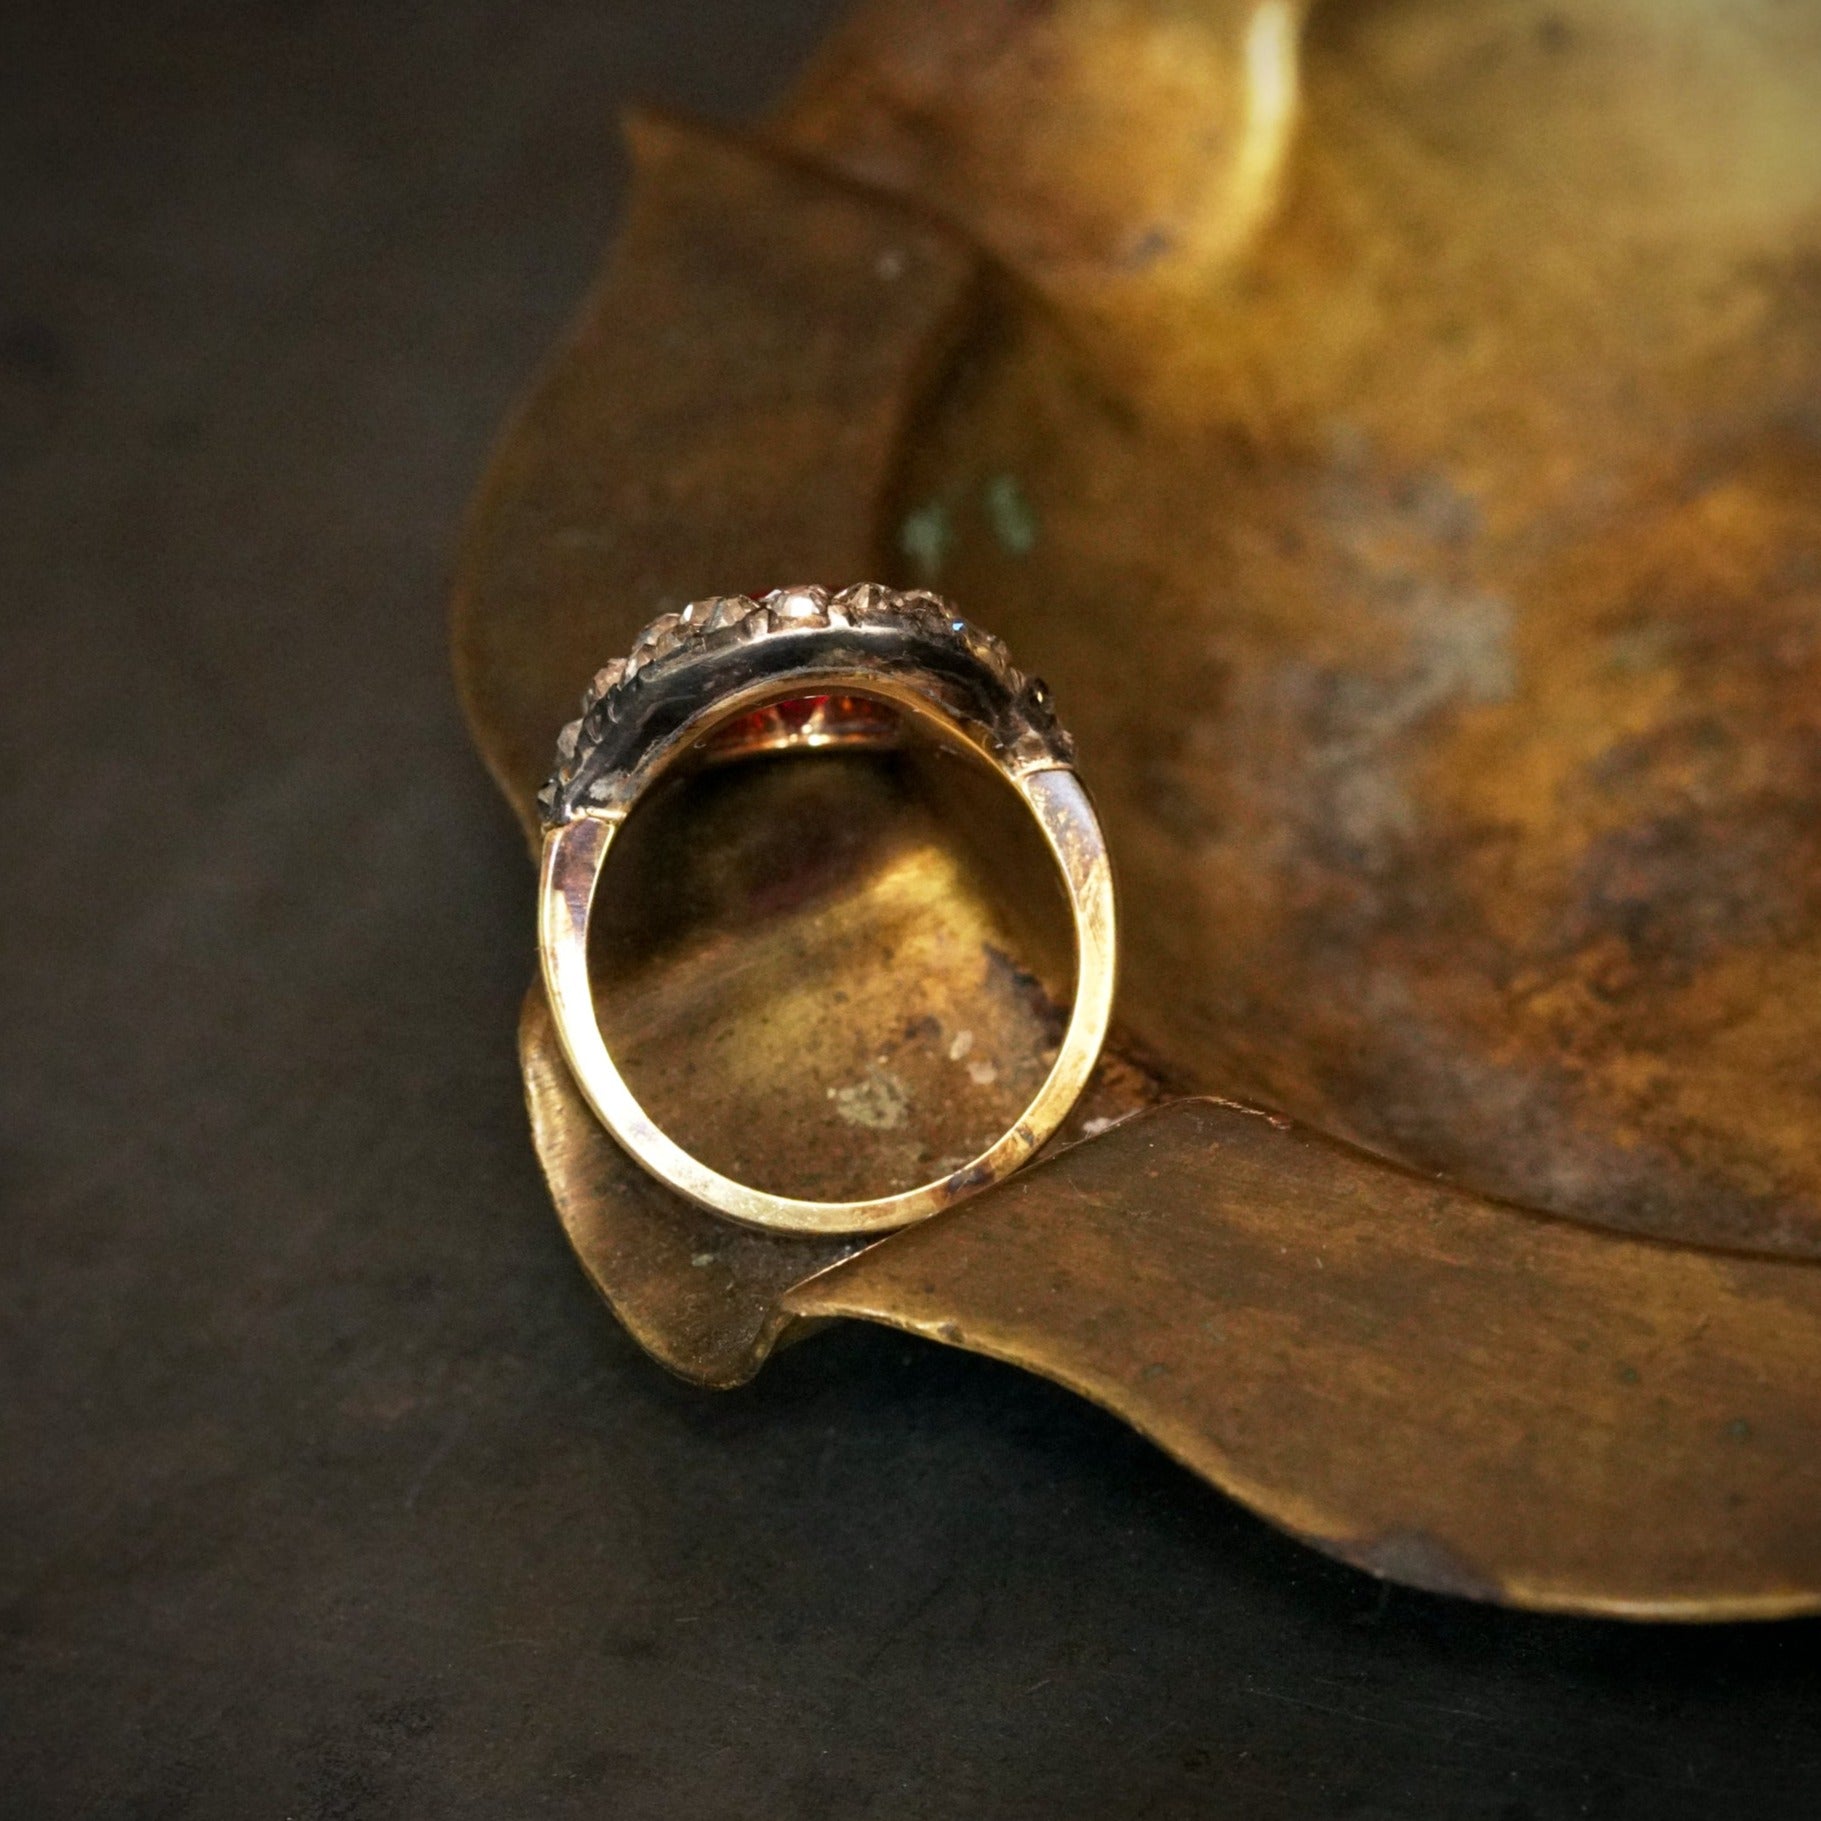 Jogani Exquisite Georgian Era Ring with a Glowing 3.12 CT No Heat Burmese Ruby and Lustrous Table-Cut Diamonds